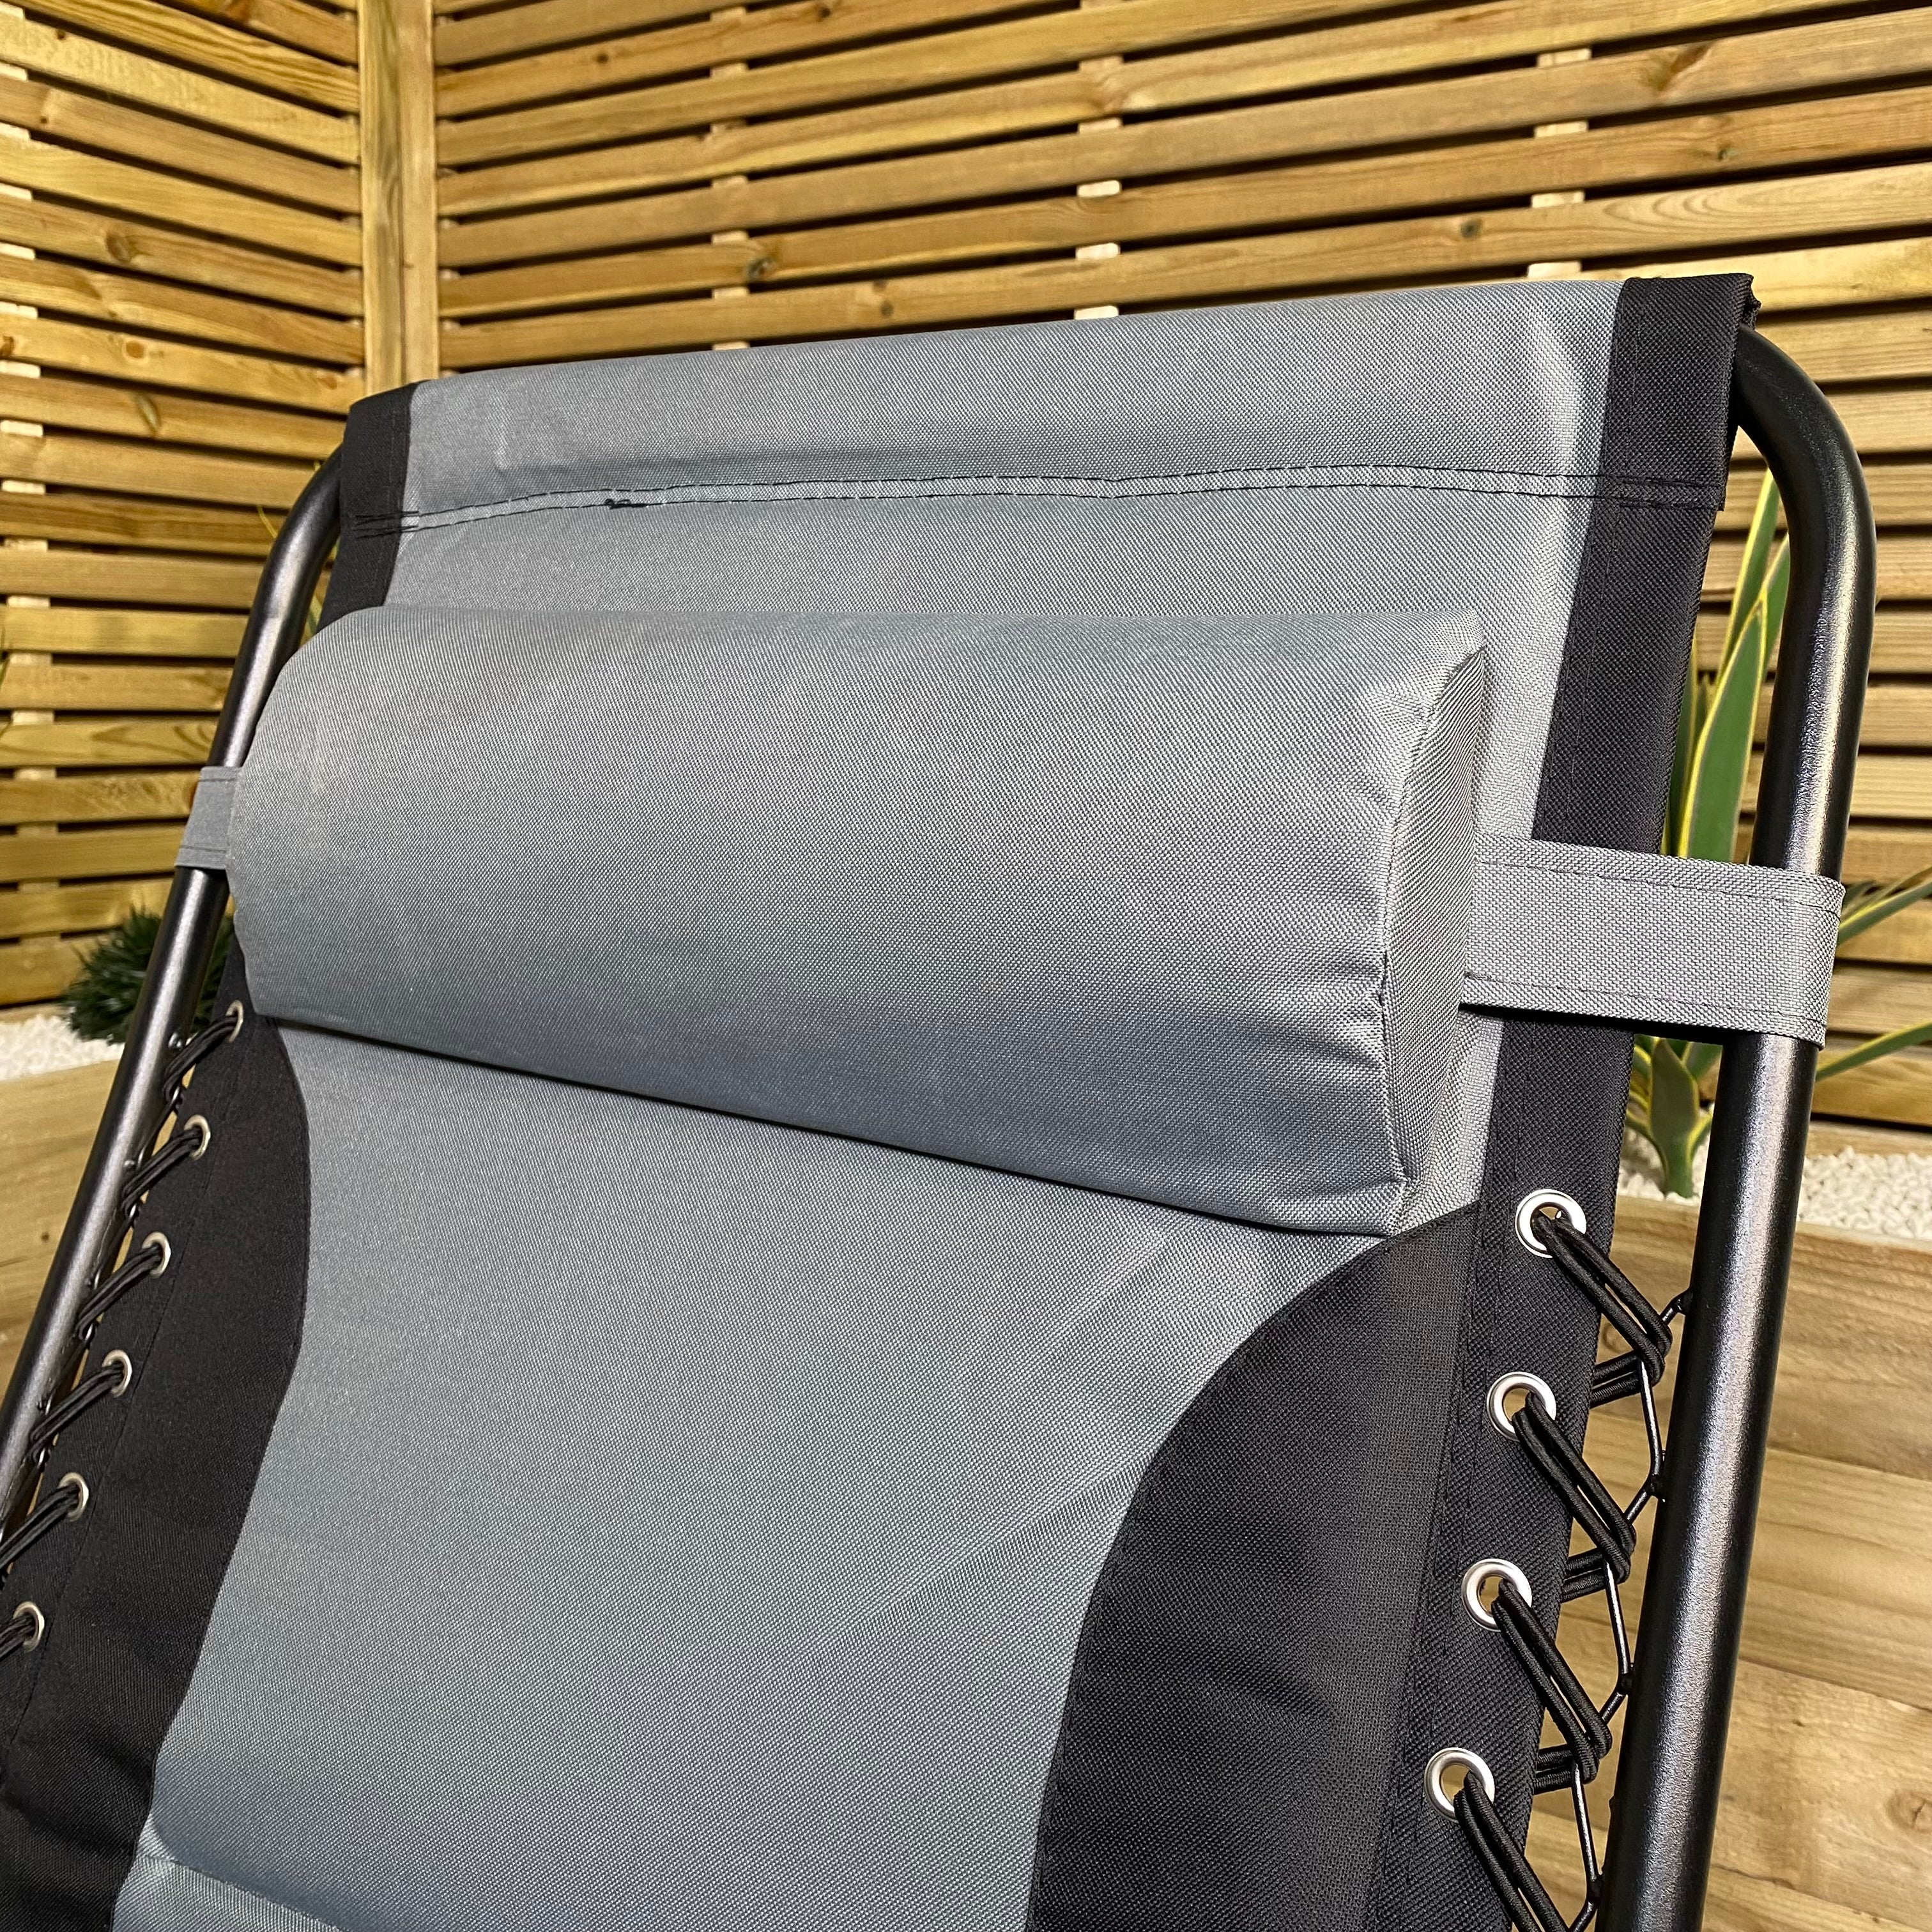 Luxury Padded Multi Position Zero Gravity Garden Relaxer Chair Lounger in Grey & Black